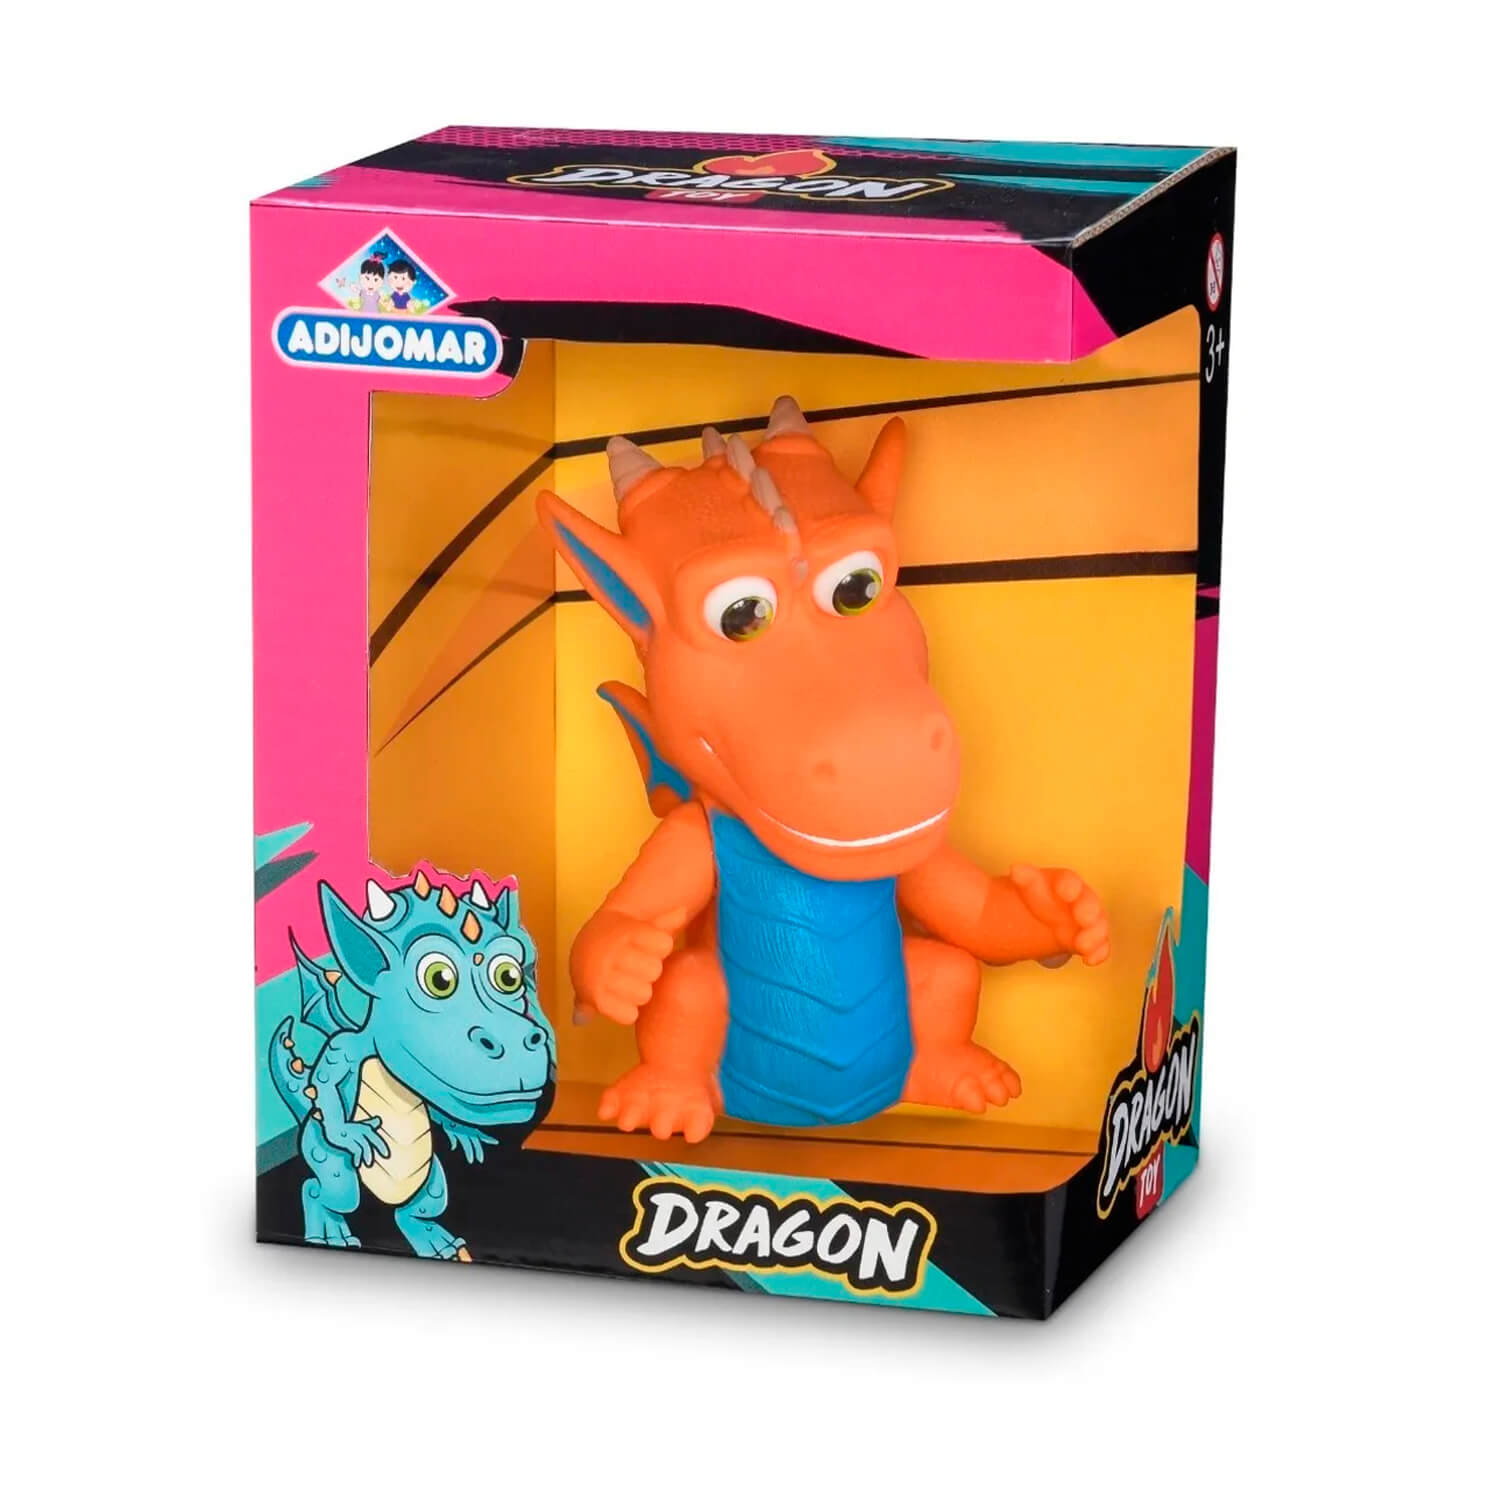 Lojas-TEM-Dragon-Toy-Adijomar-Brinquedos